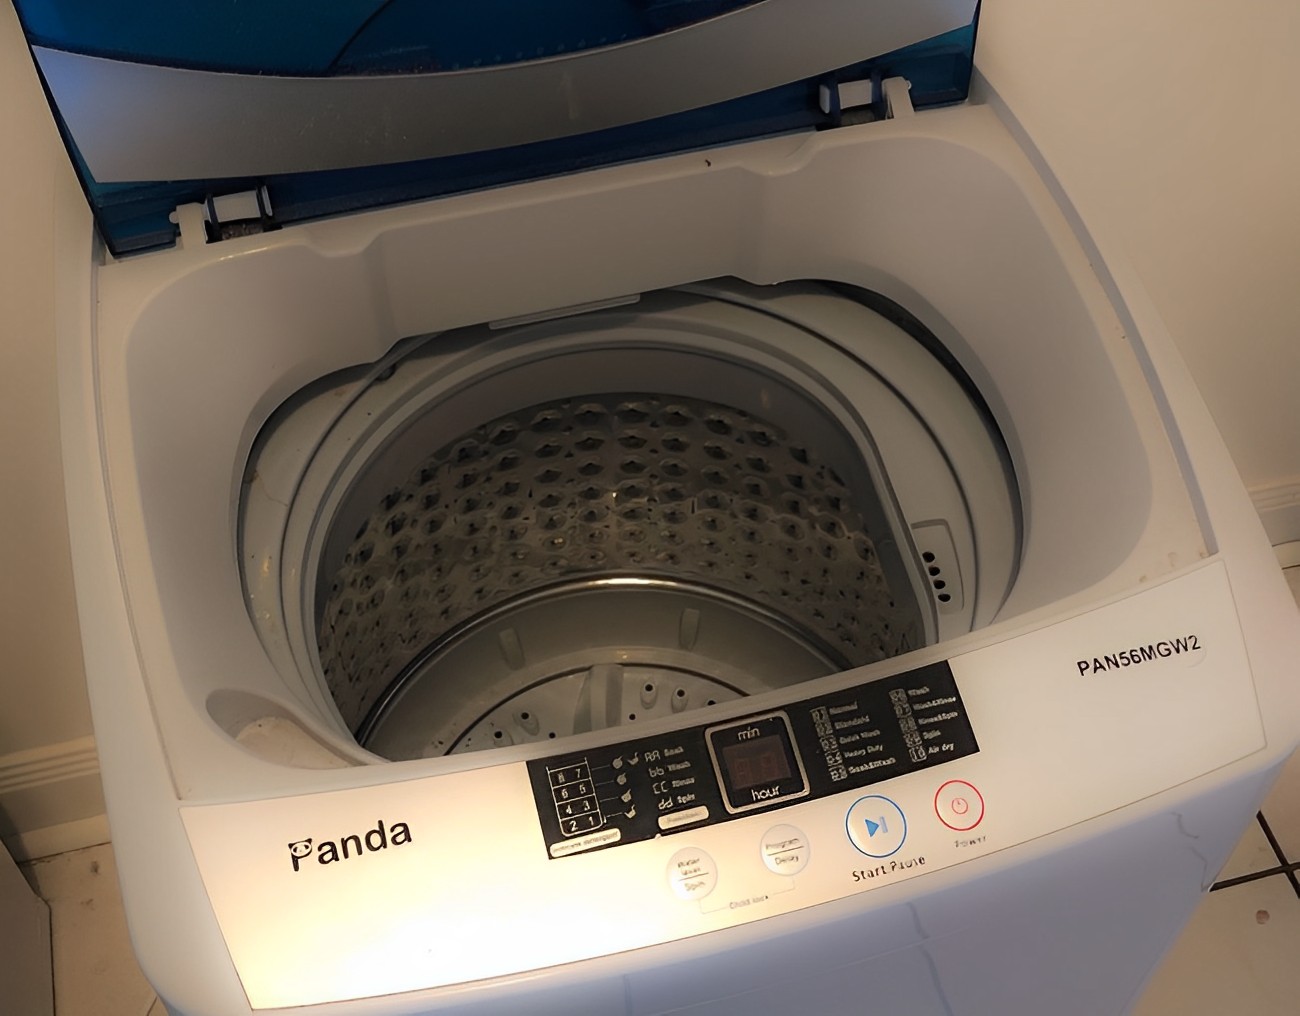  Panda Portable Washing Machine 10 LBS Load Volume